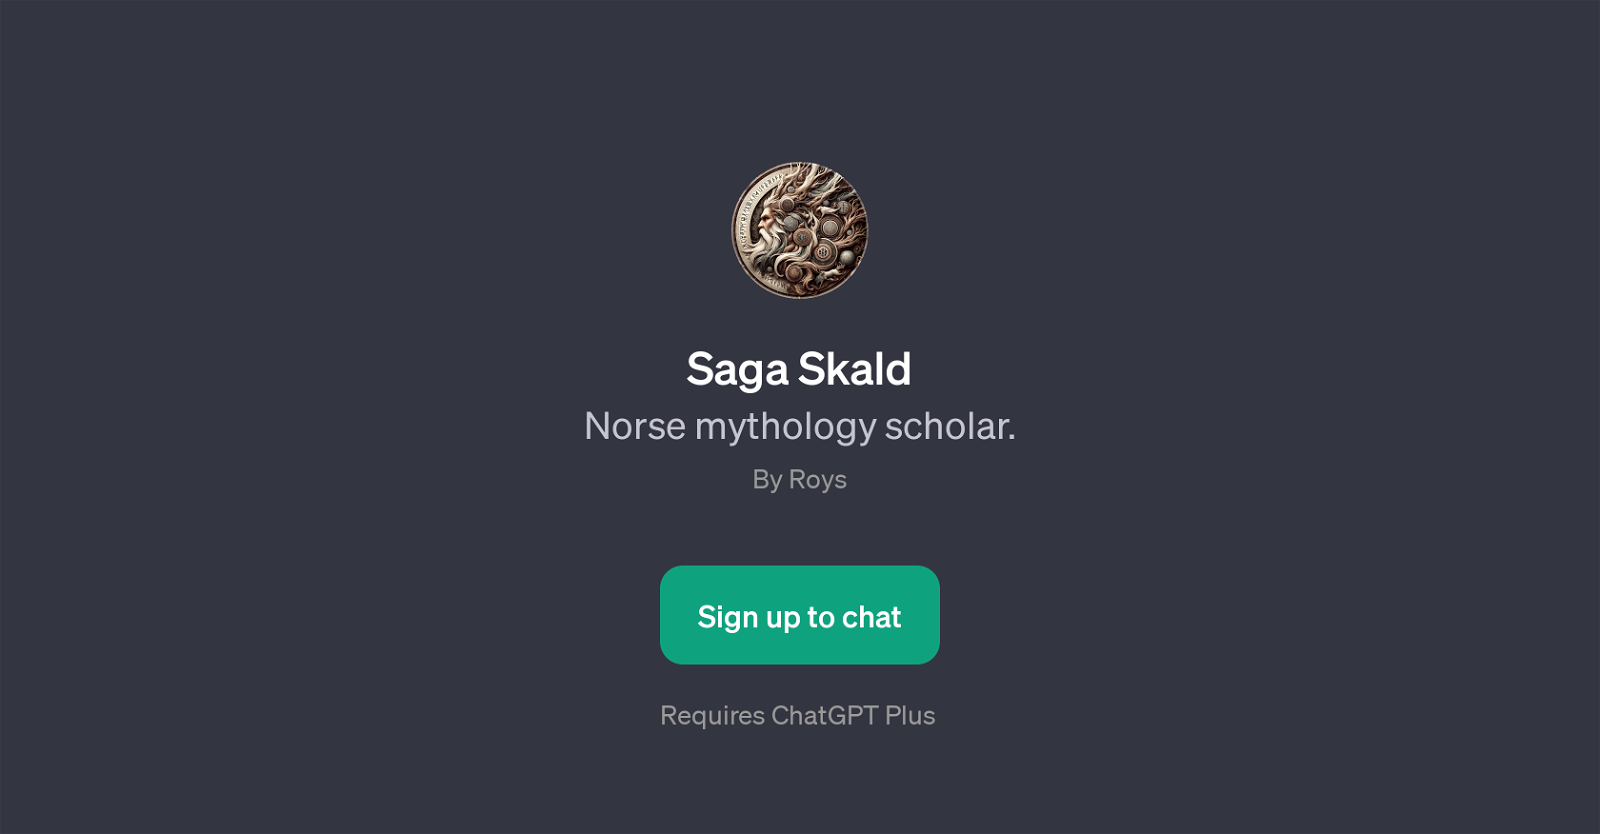 Saga Skald website